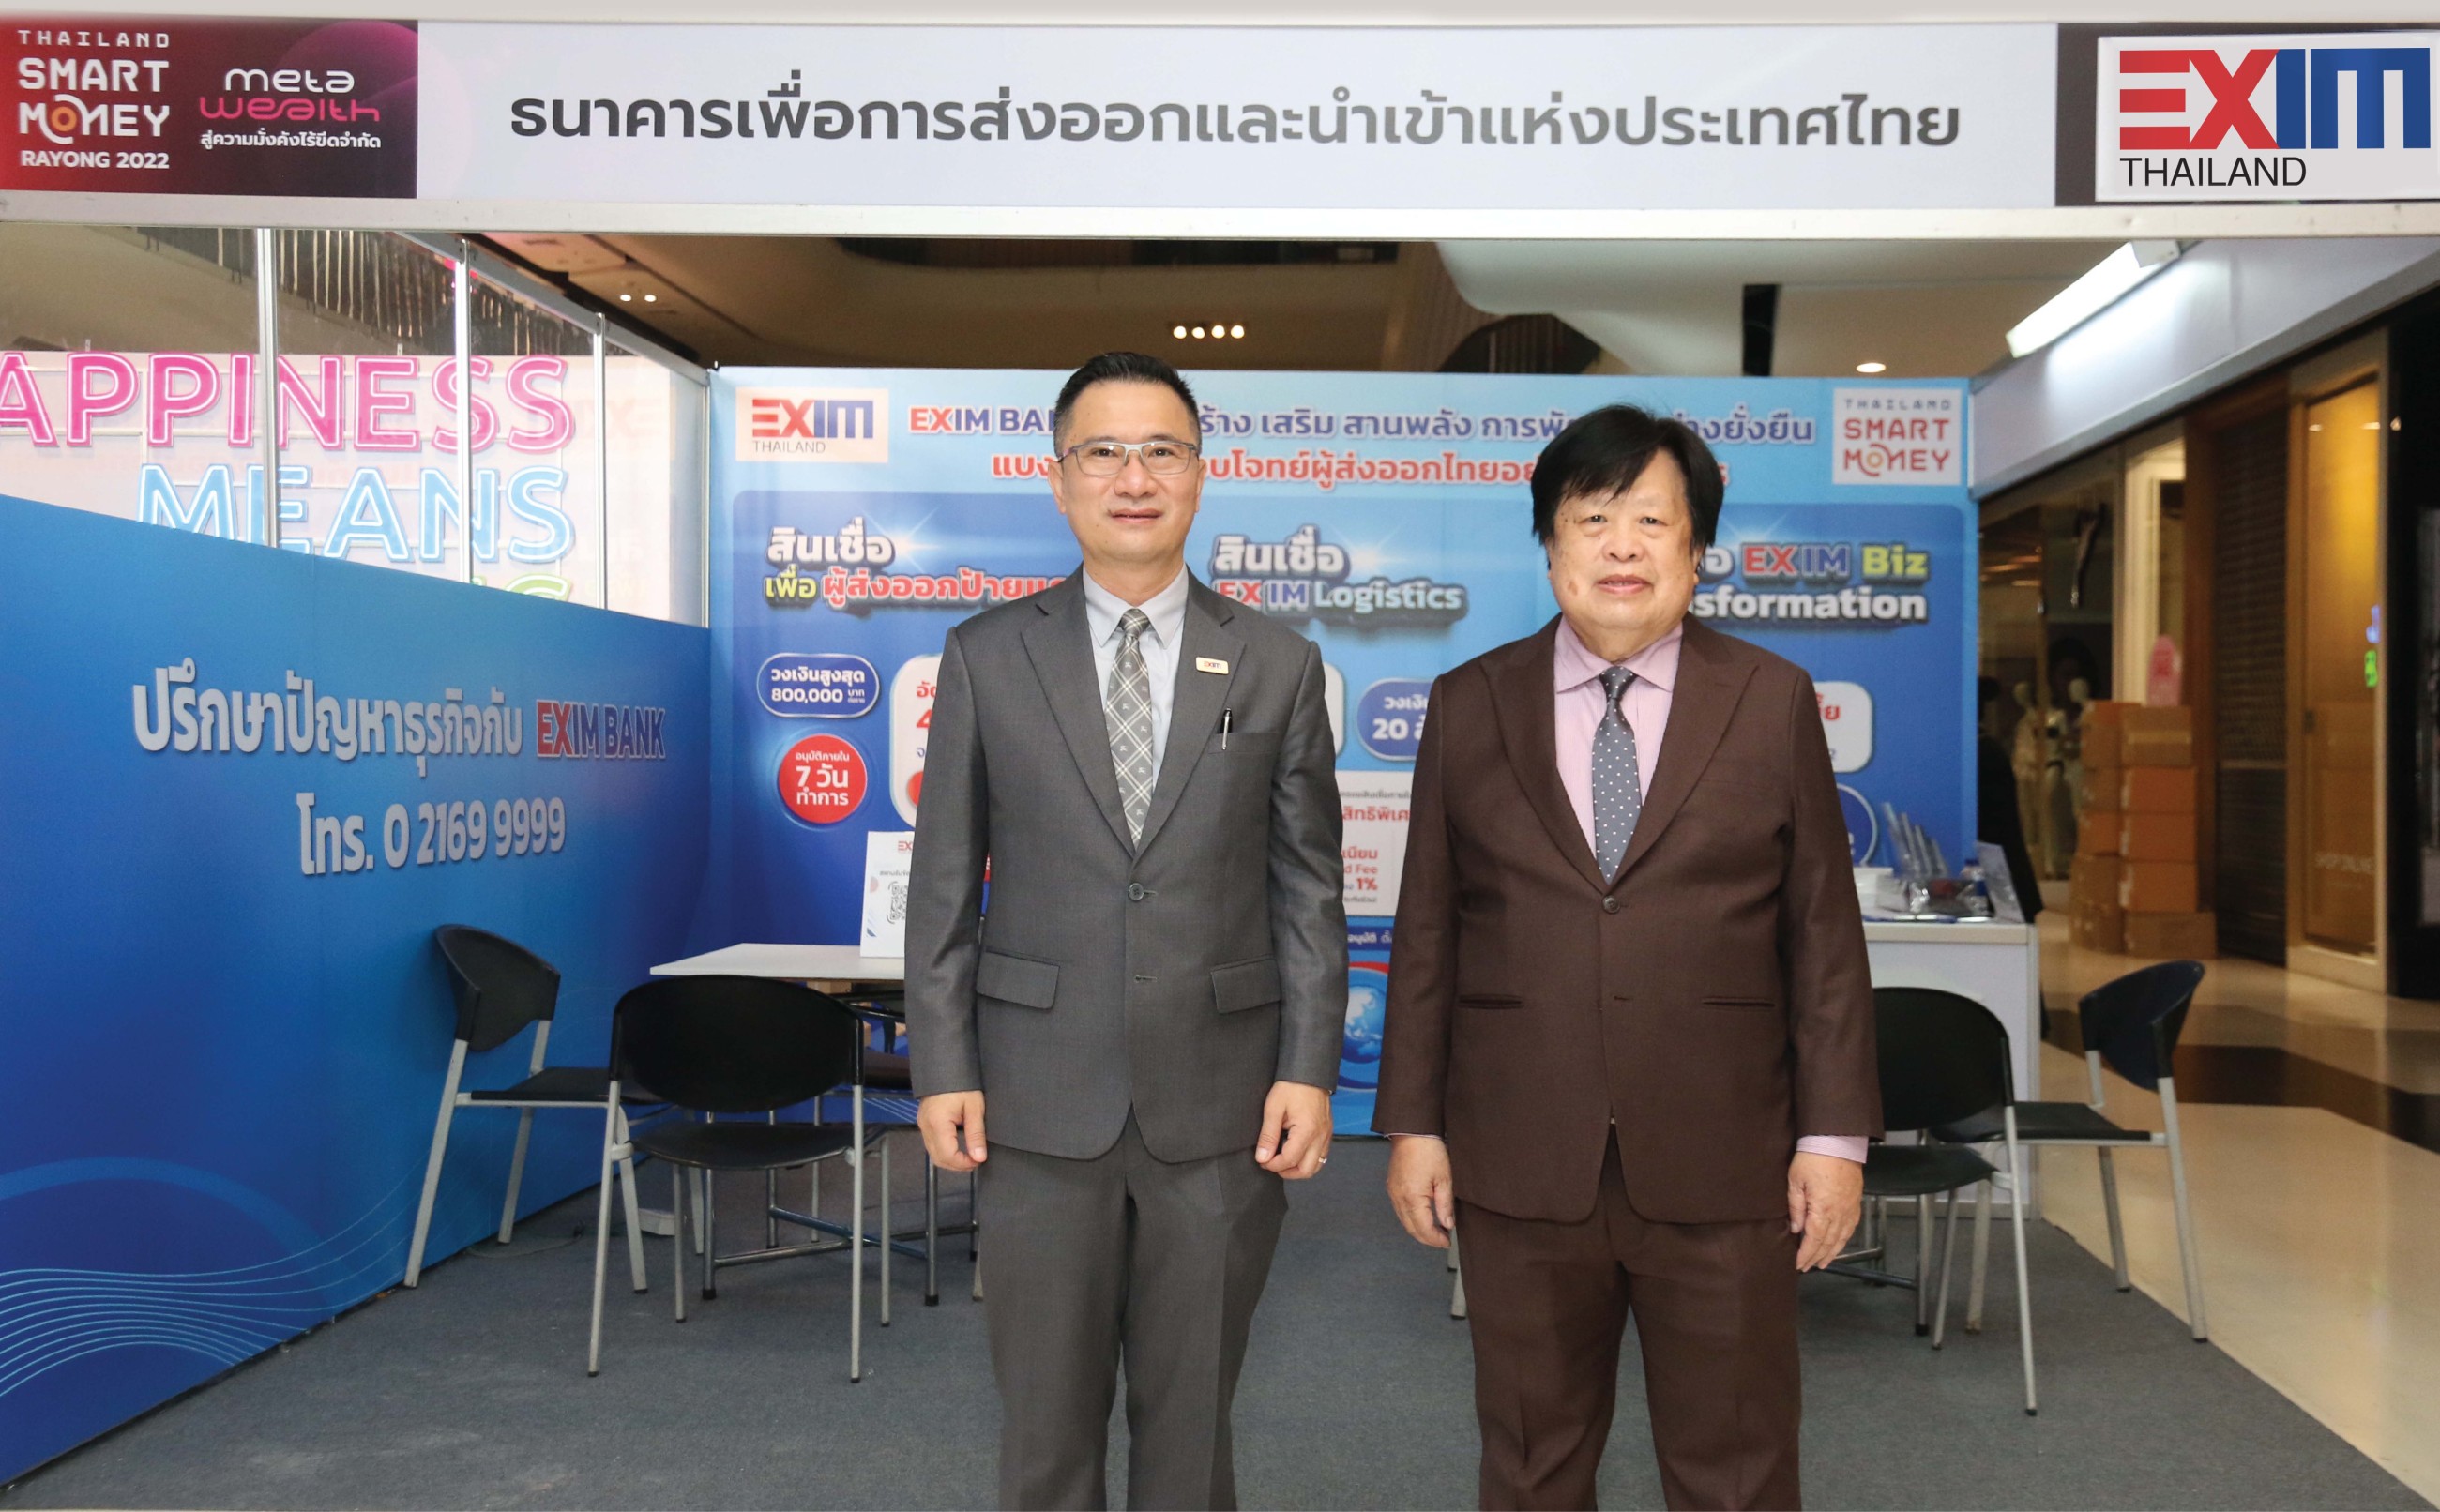 EXIM BANK ร่วมออกบูทในงาน Thailand Smart Money 2022 จ.ระยอง